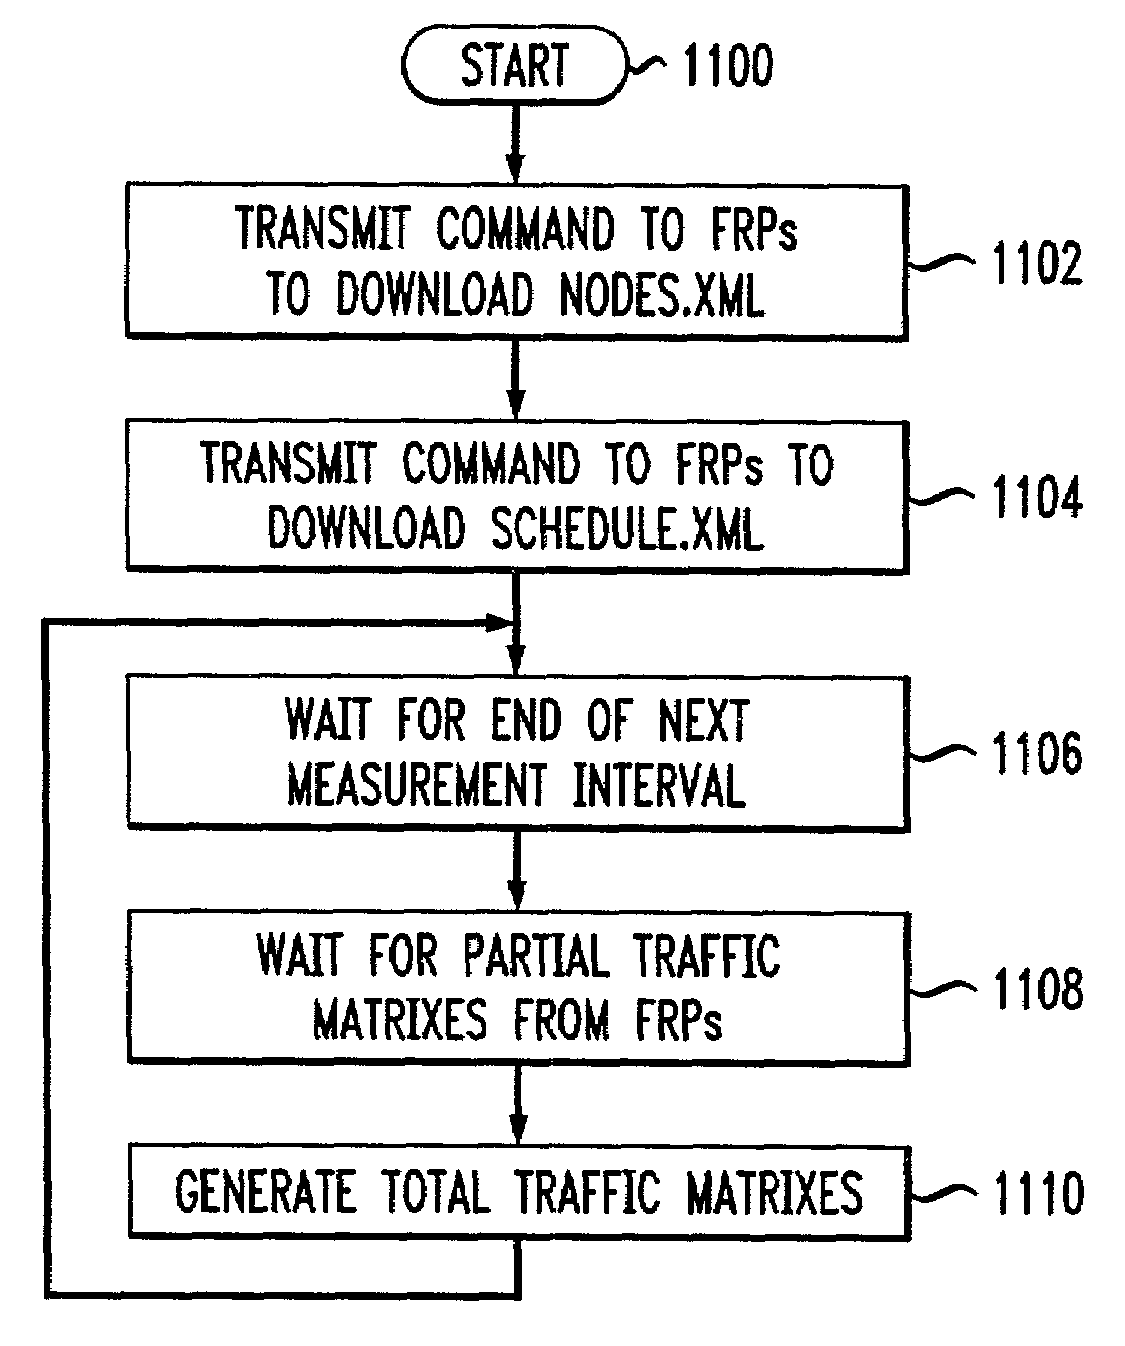 Traffic matrix computation for a backbone network supporting virtual private networks